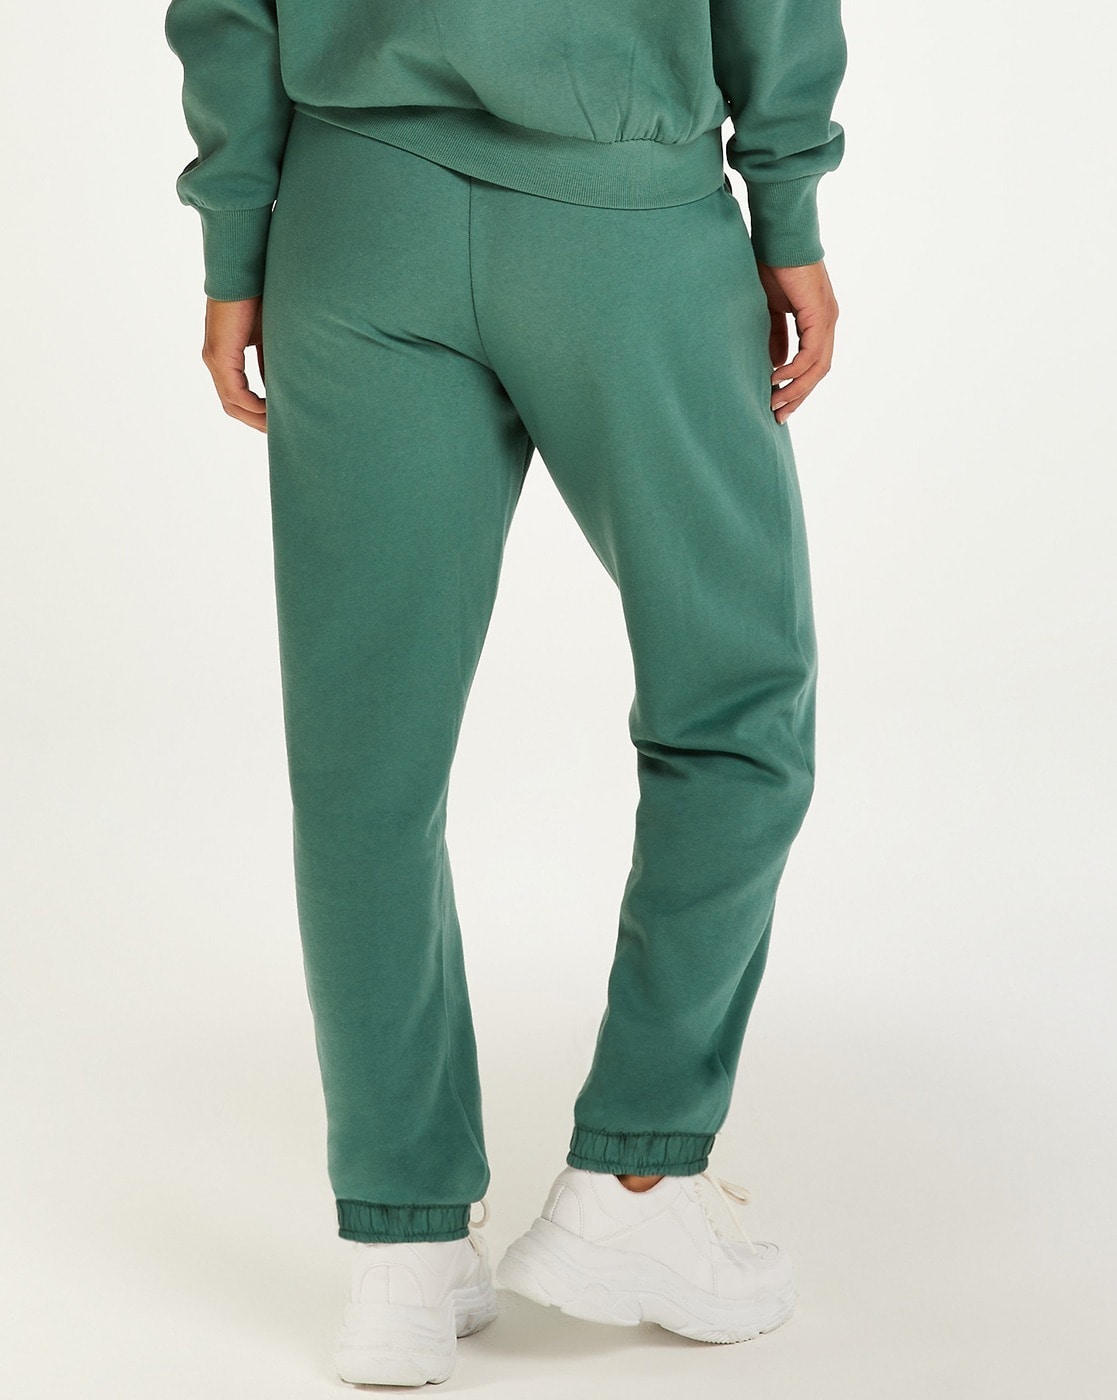 Buy Green Track Pants for Women by Hunkemoller Online